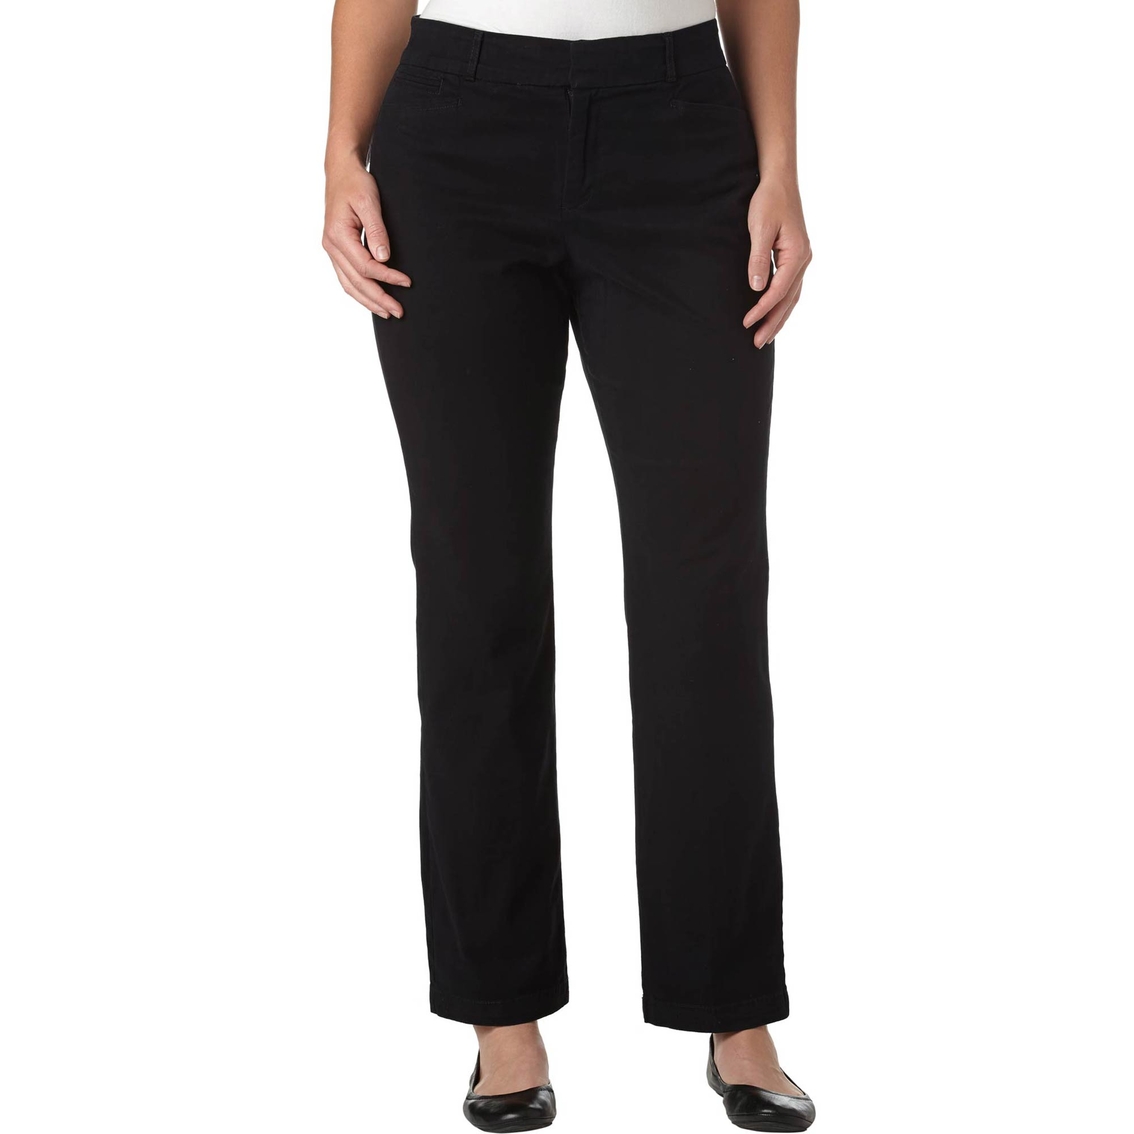 Gloria Vanderbilt Charlene Perfect Fit Pants | Pants | Clothing ...